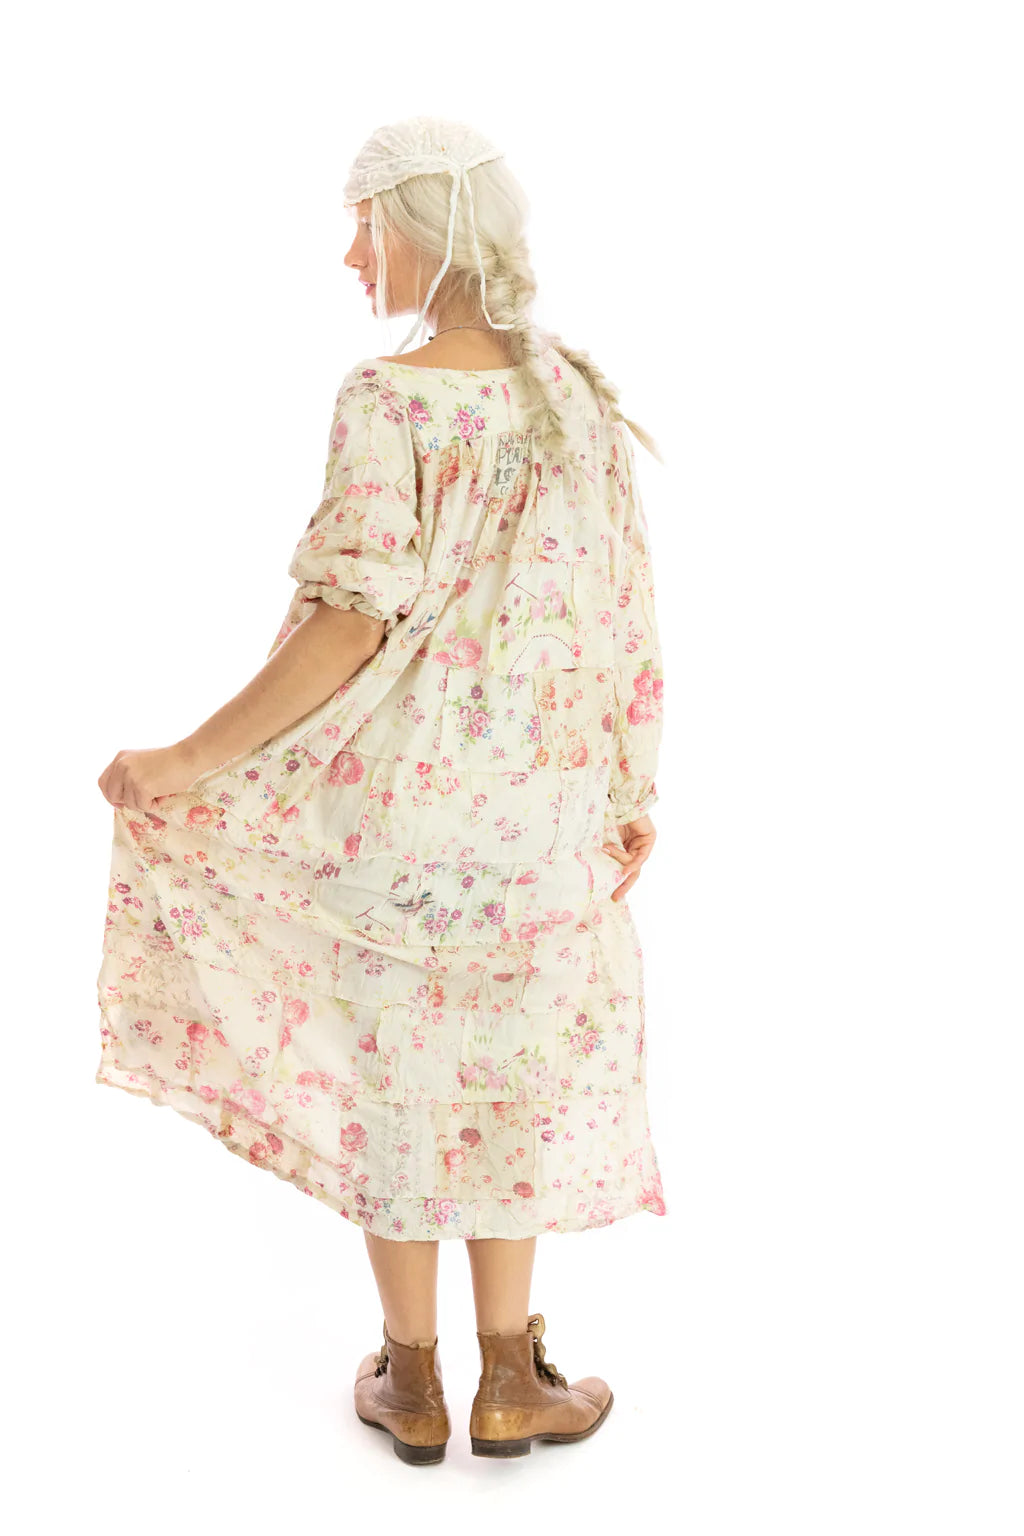 Floral Patchwork Prairie Dress 865 - Magnolia Pearl